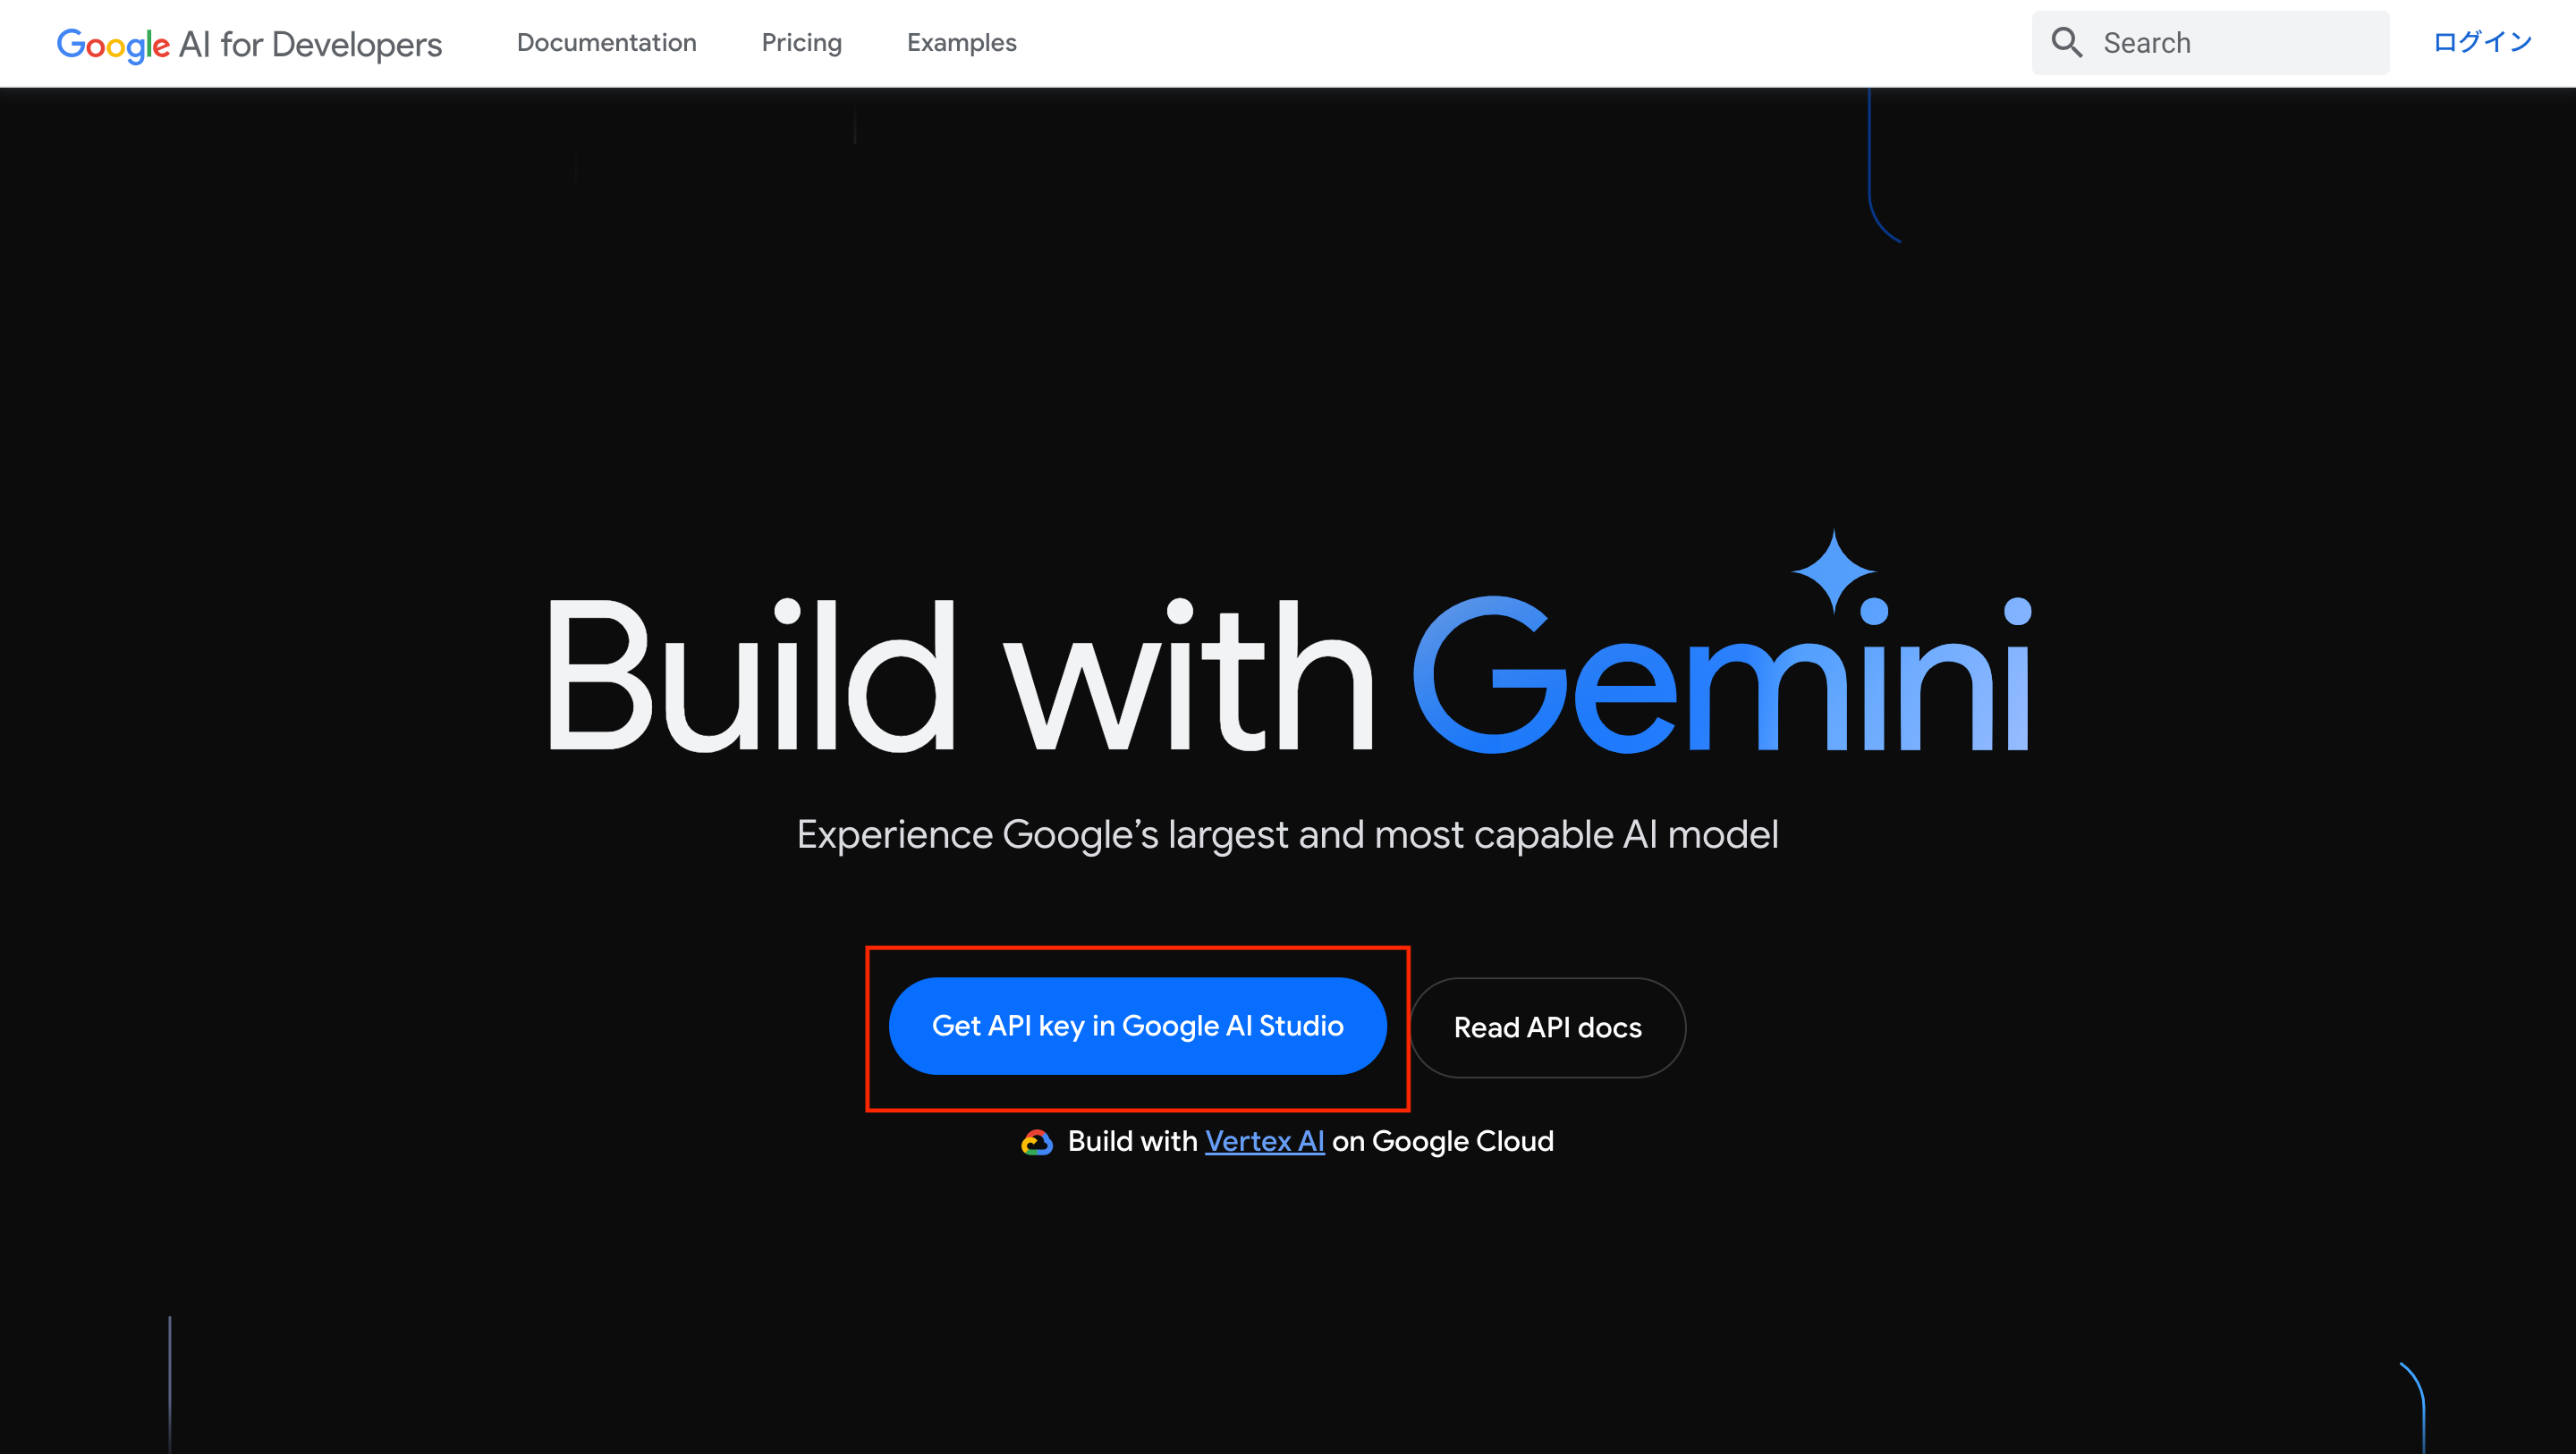 FireShot Capture 033 - Build with the Gemini API  -  Google AI for Developers - ai.google.dev.png